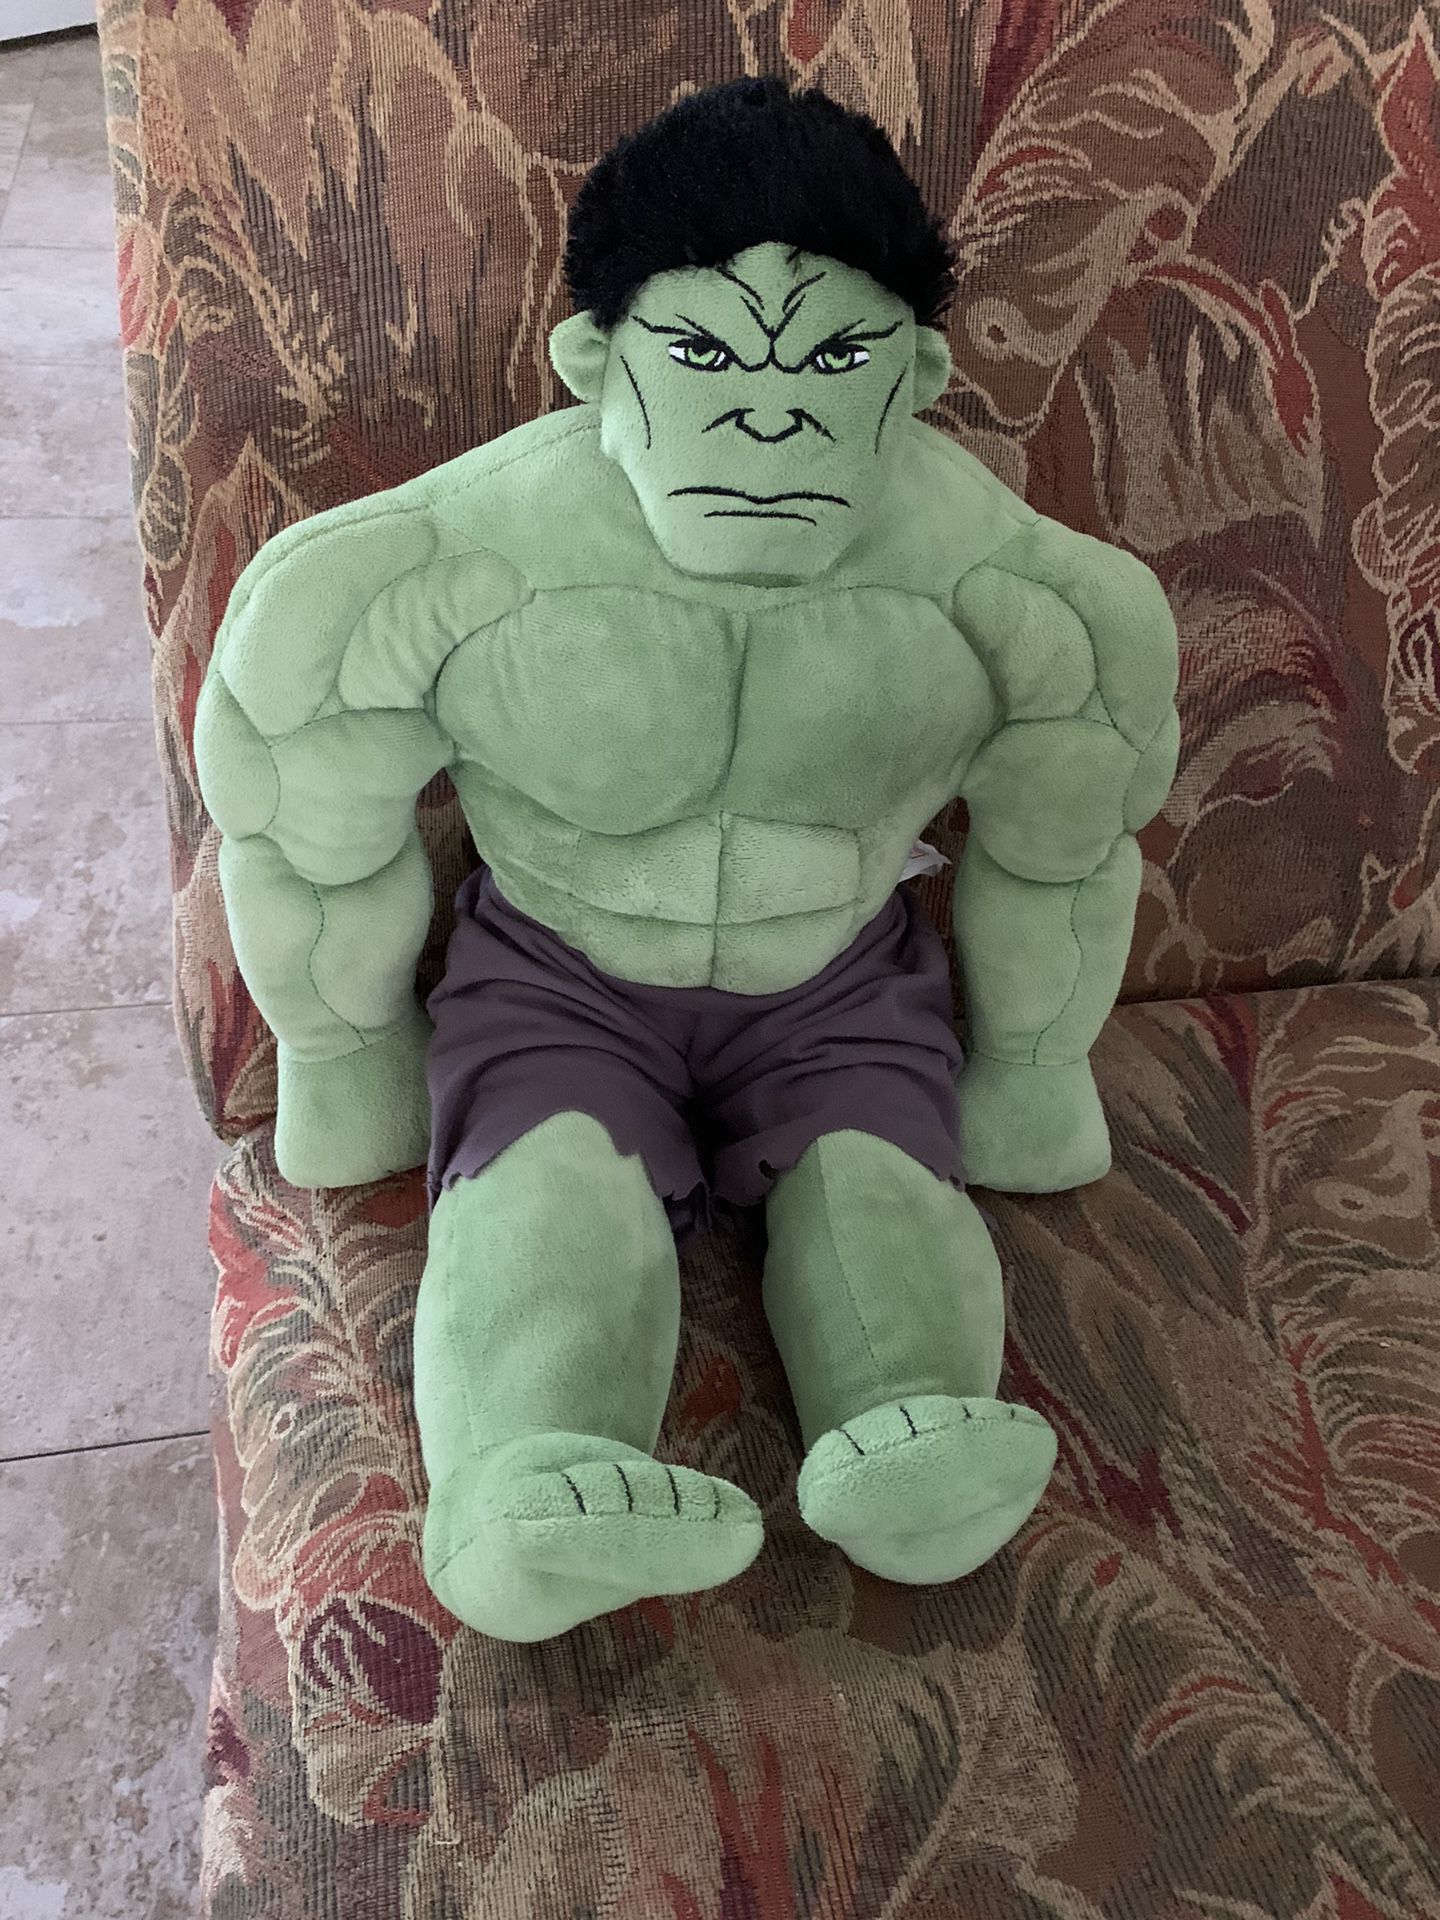 24” Large Incredible Hulk Marvel Avengers Plush Pillow Buddy Stuffed Animal 